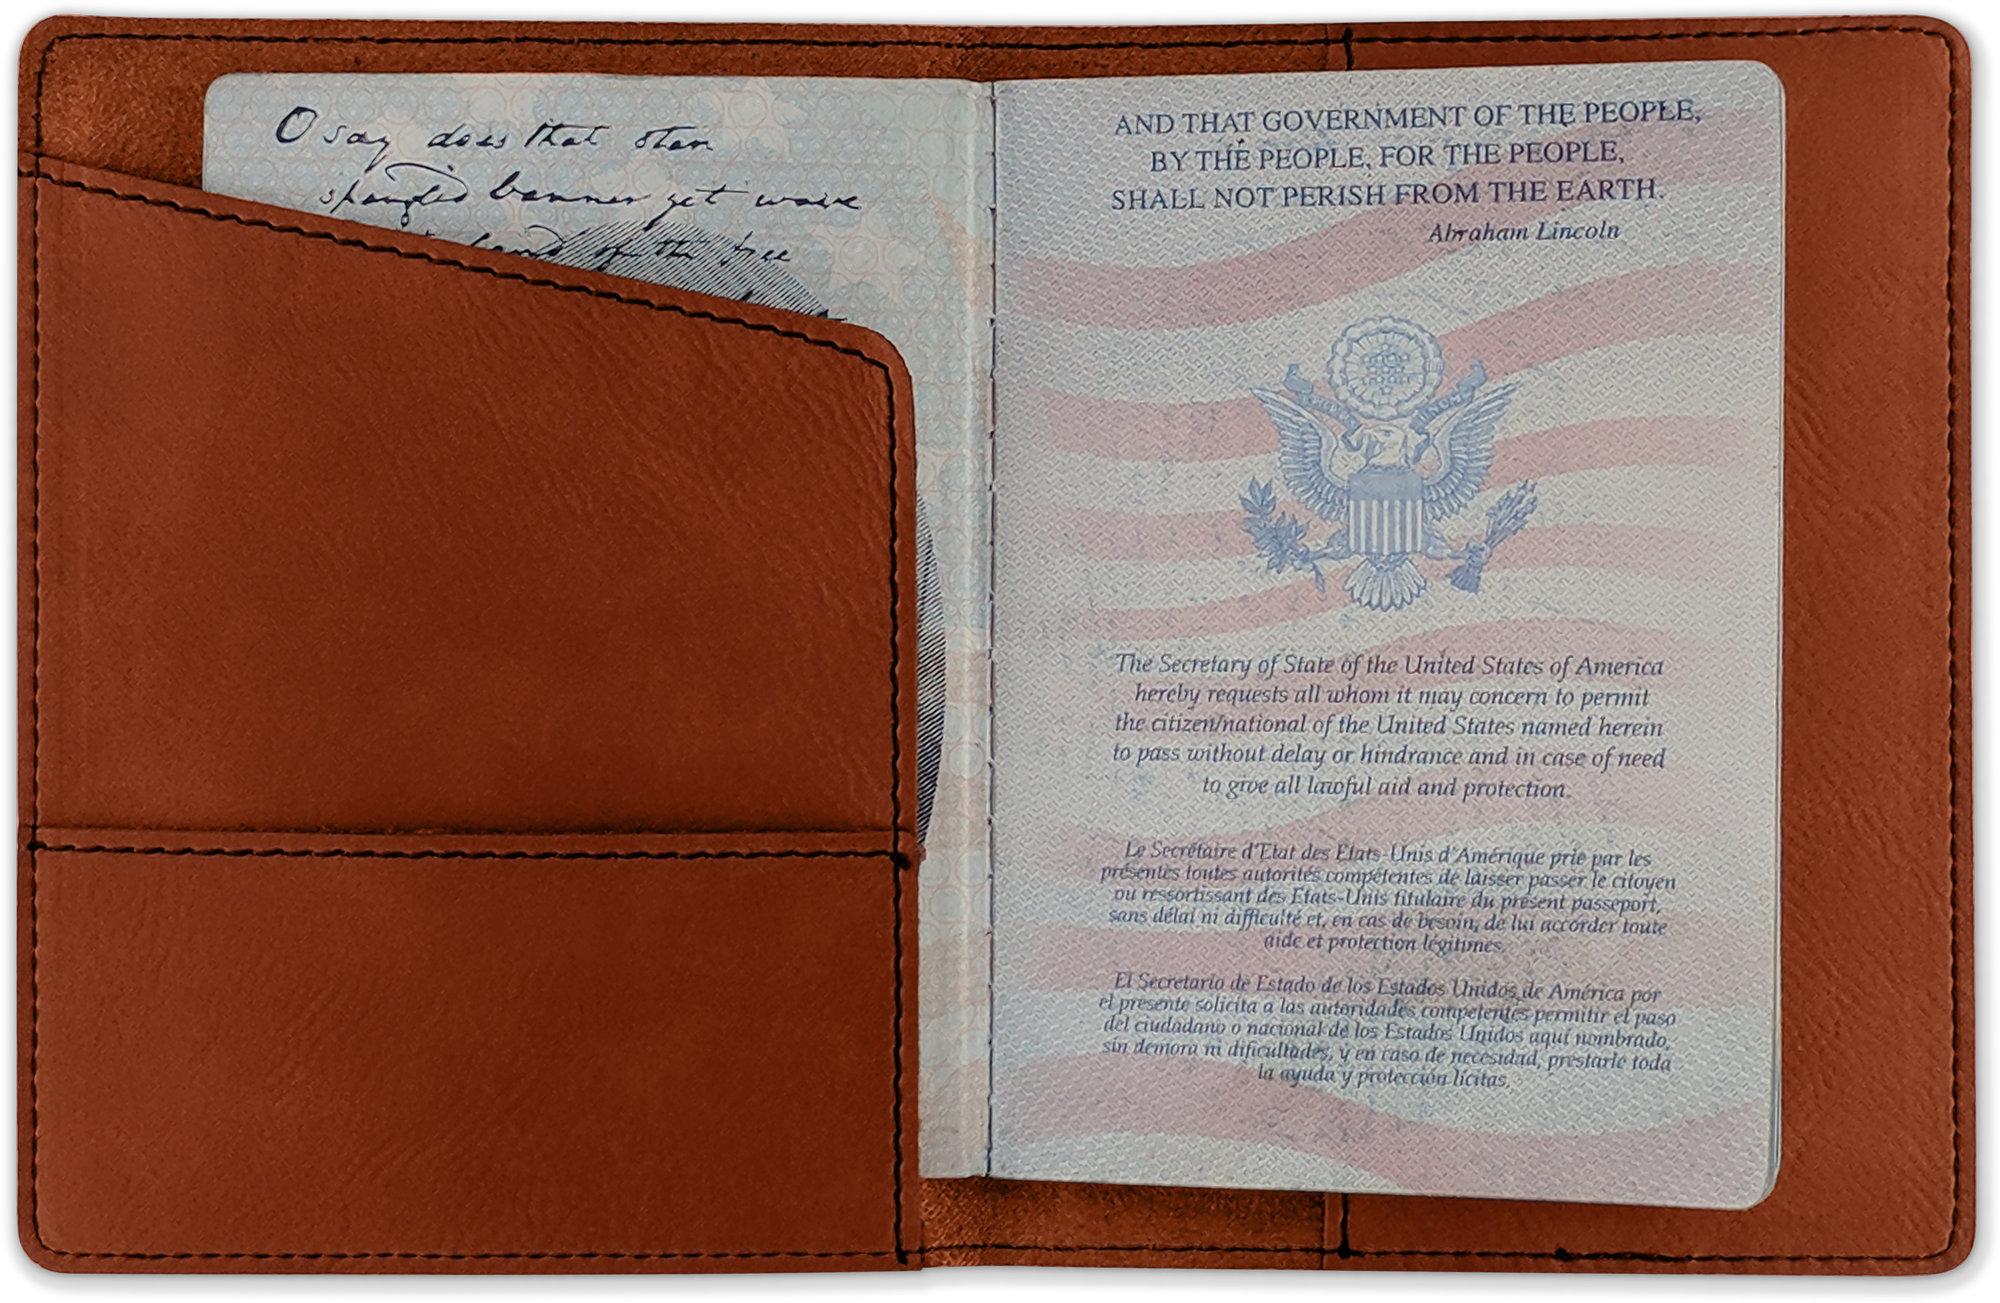 Custom Passport Holders - Faux Leather